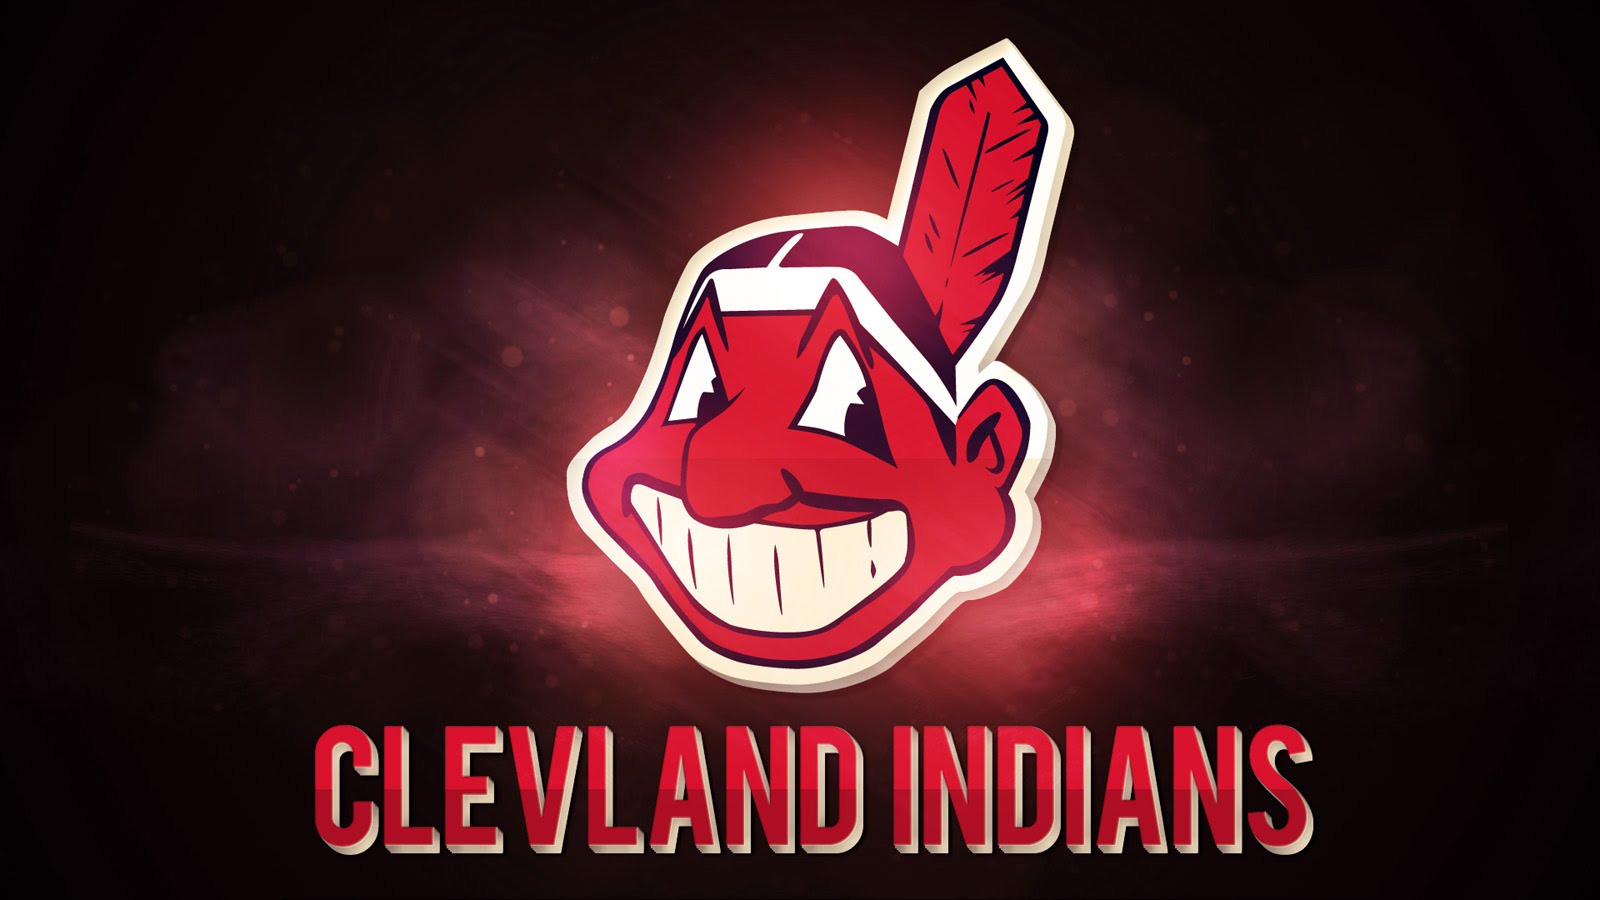 Cleveland Indians Backgrounds, Compatible - PC, Mobile, Gadgets| 1600x900 px